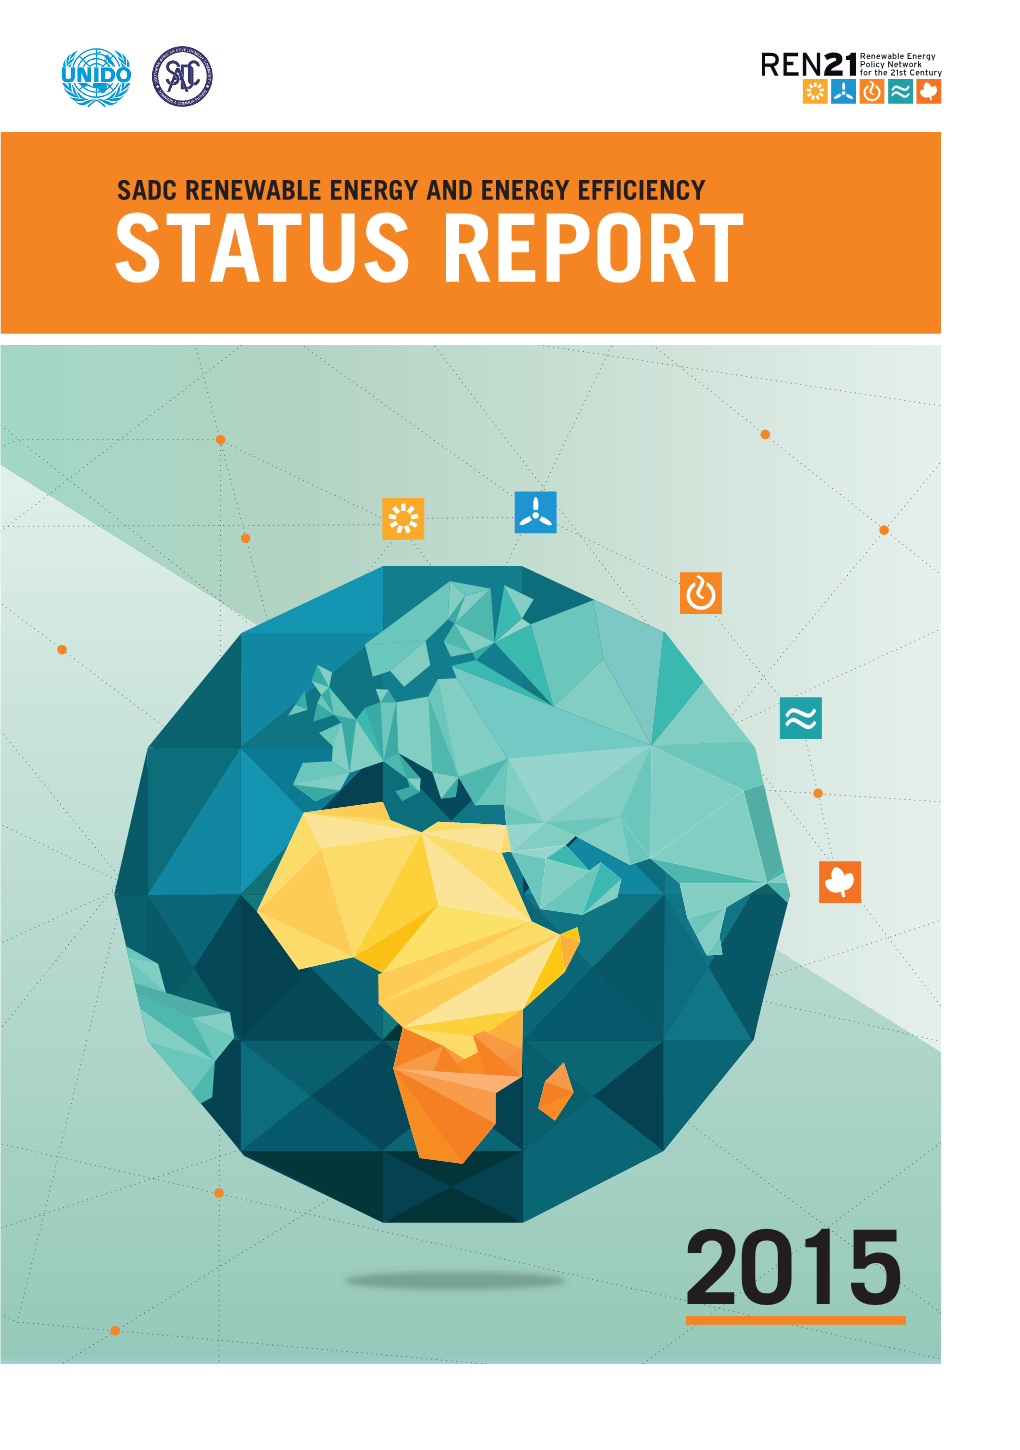 SADC Renewable Energy and Energy Efficiency Status Report 2015